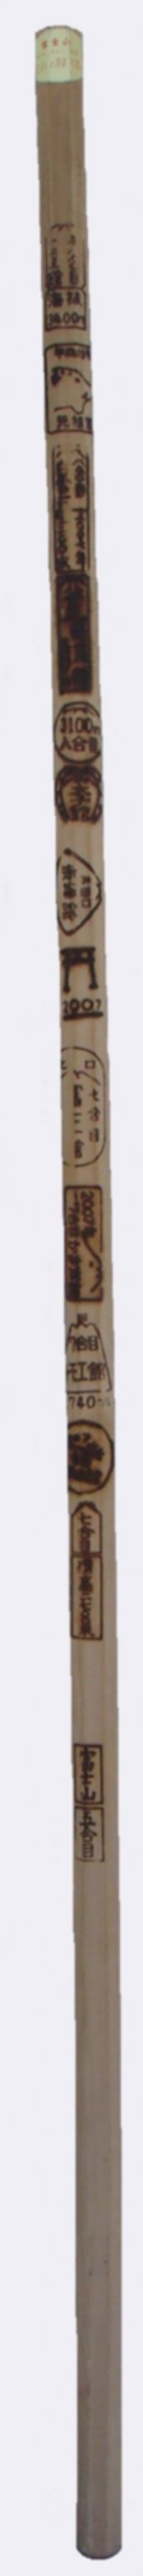 Fuji walking stick with stamps